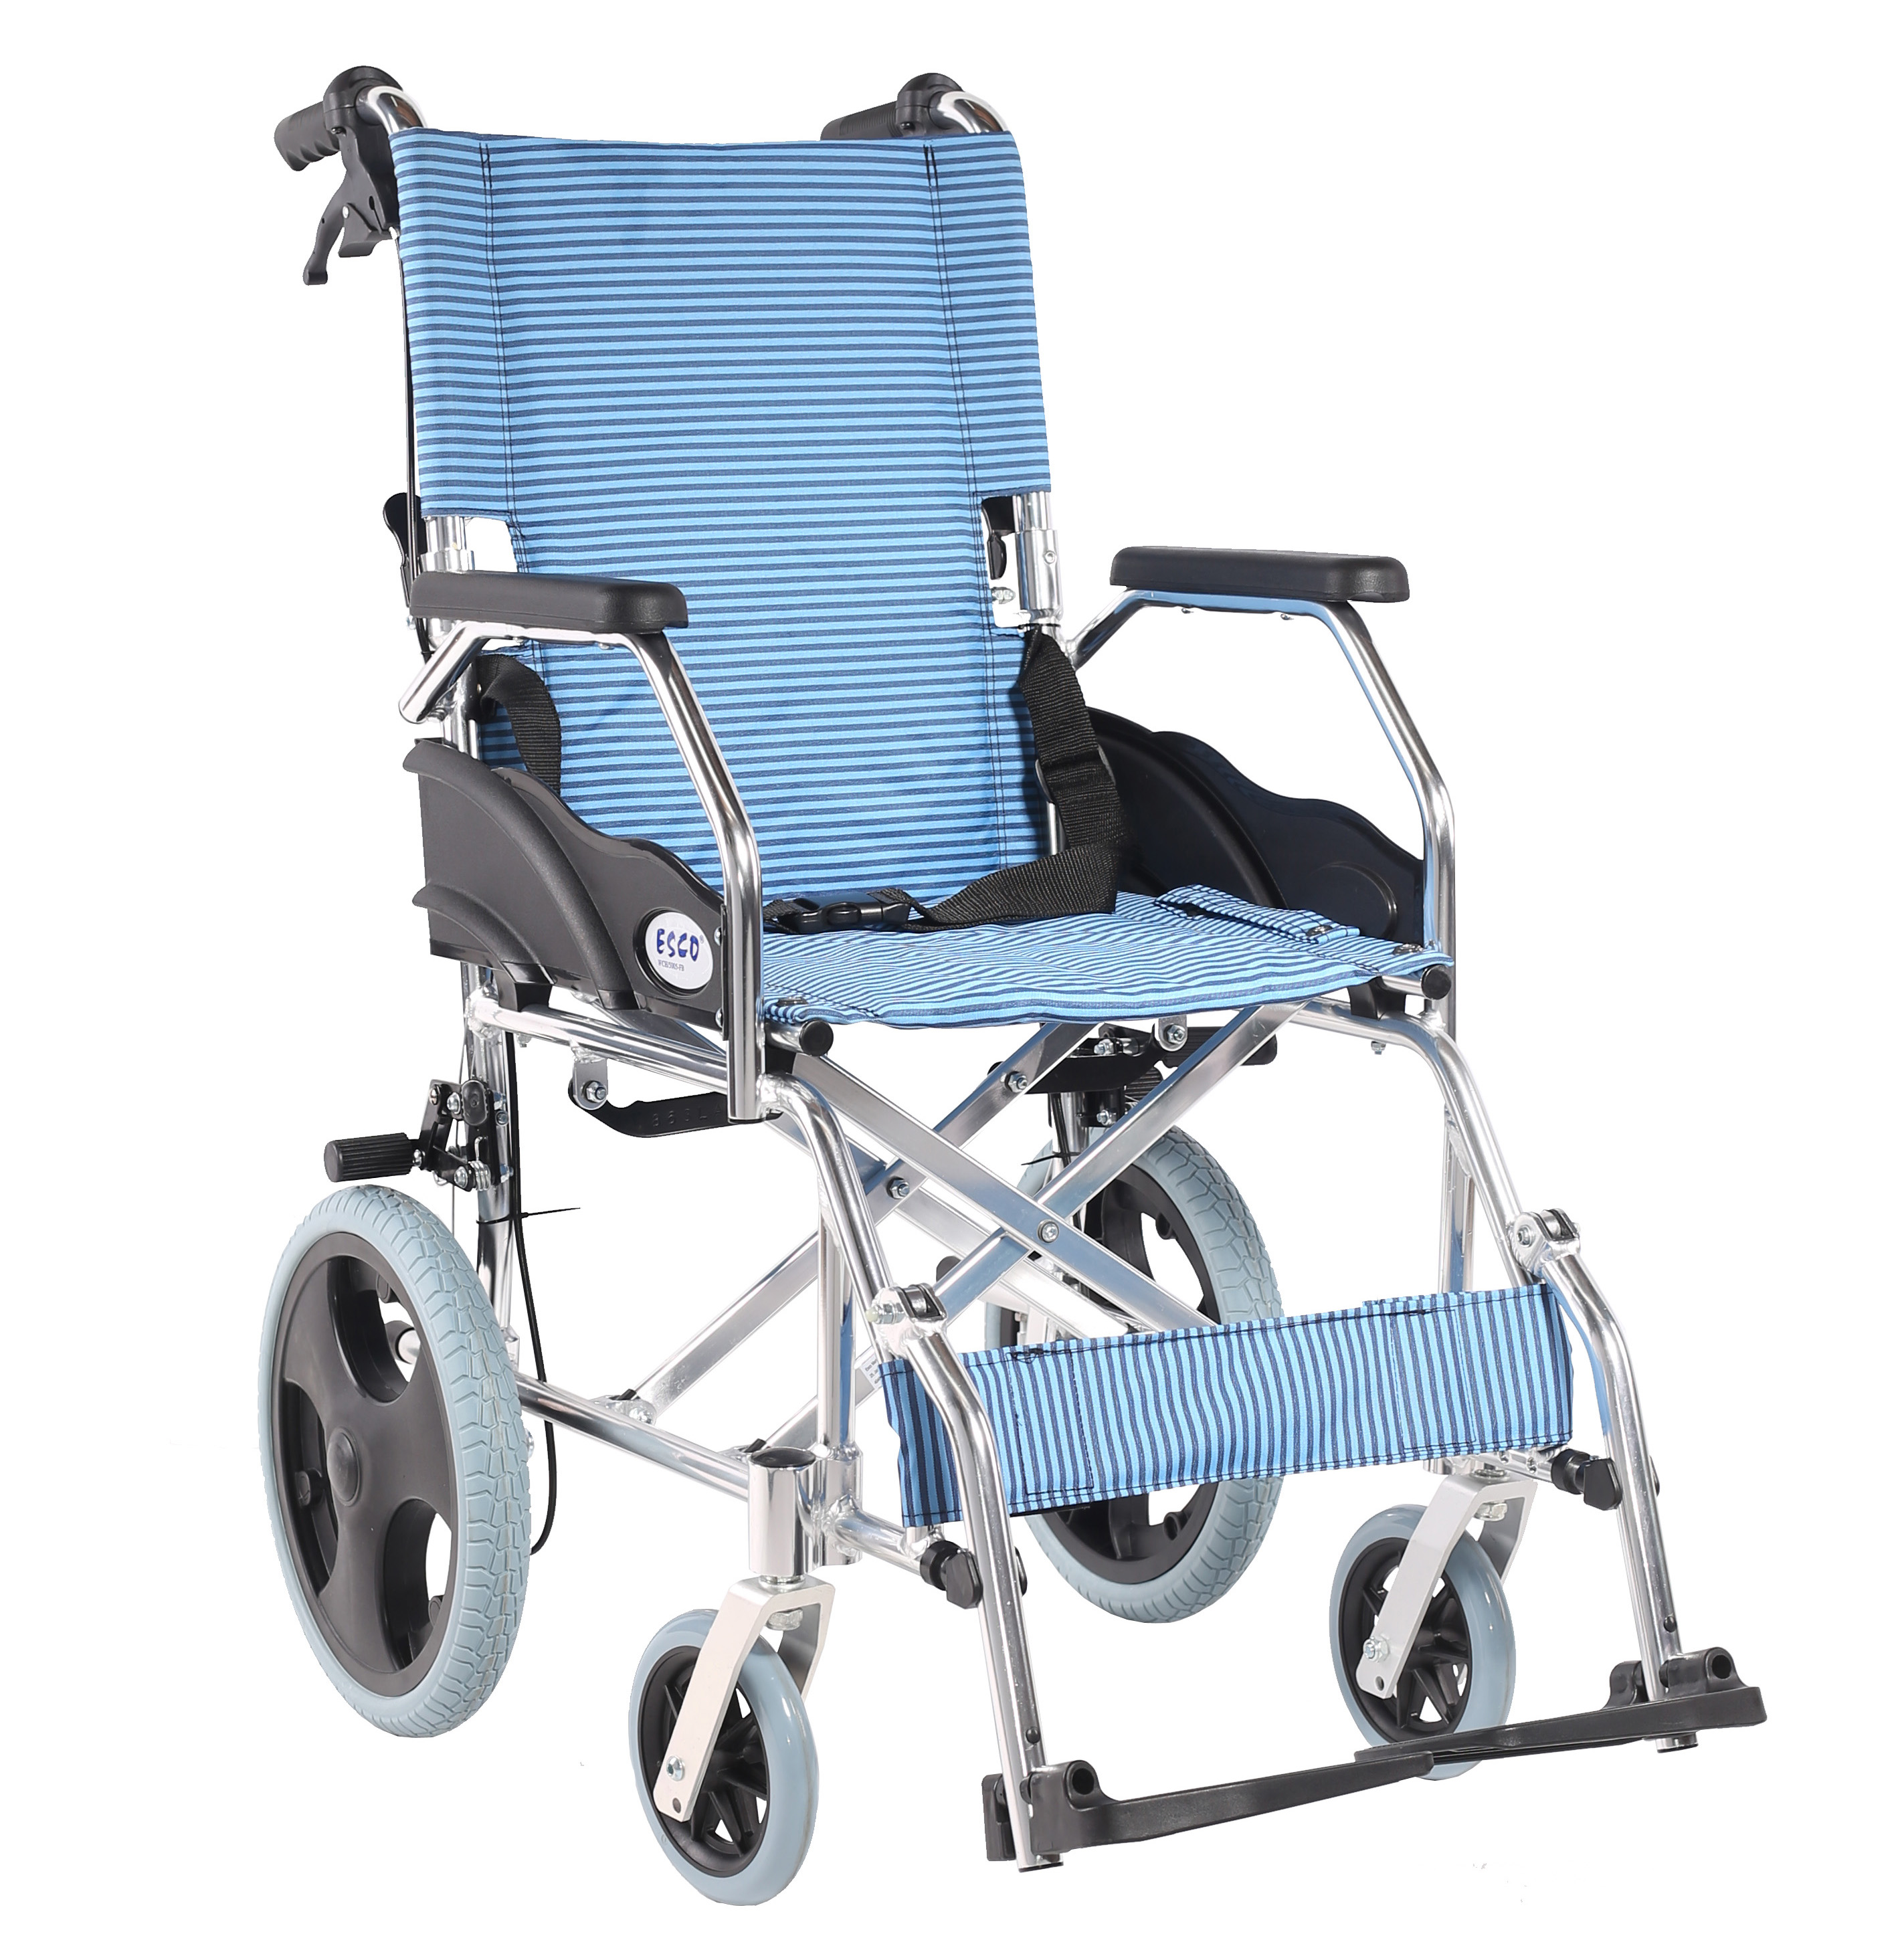 Wheelchair Lightweight For Travel 8kg. 1 